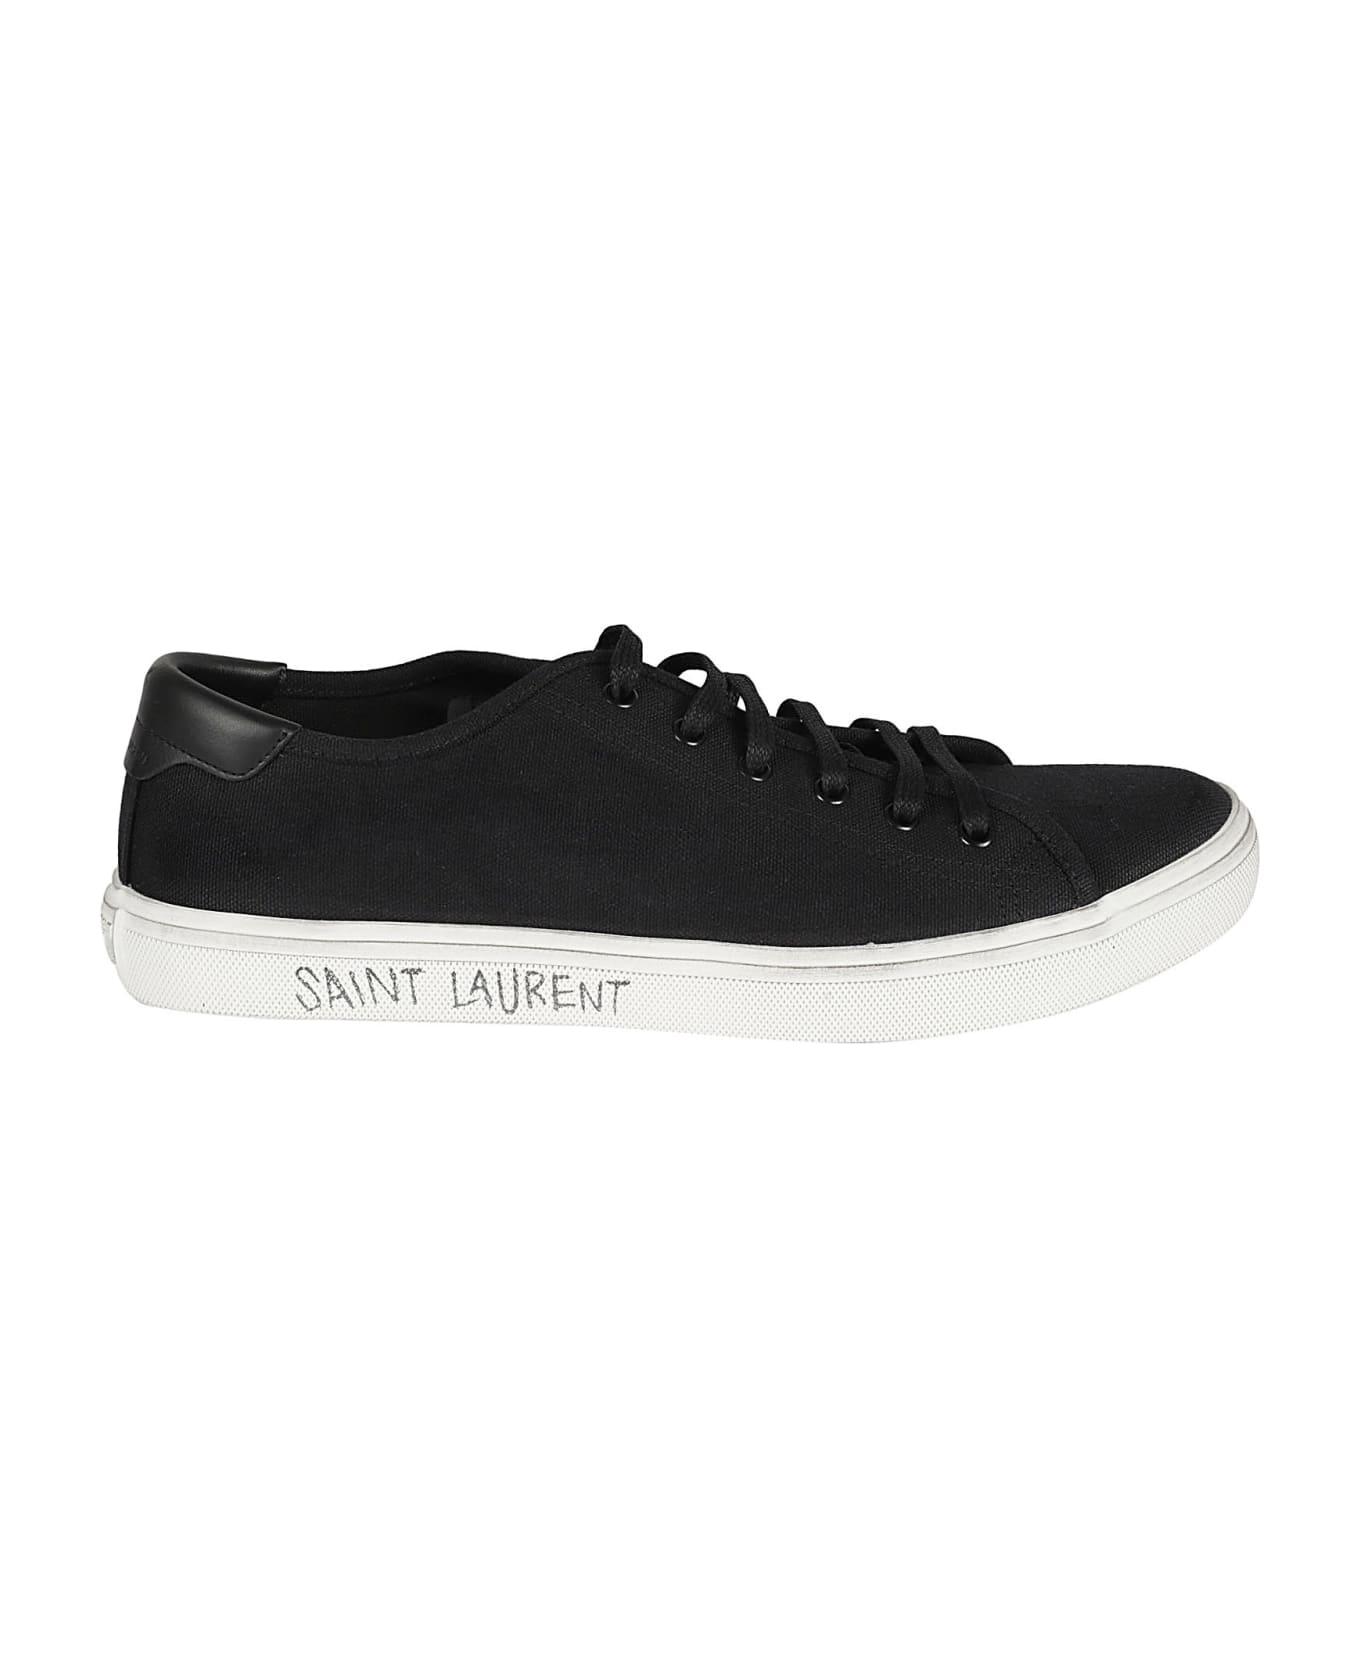 Saint Laurent Malibu Sneakers - Nero スニーカー